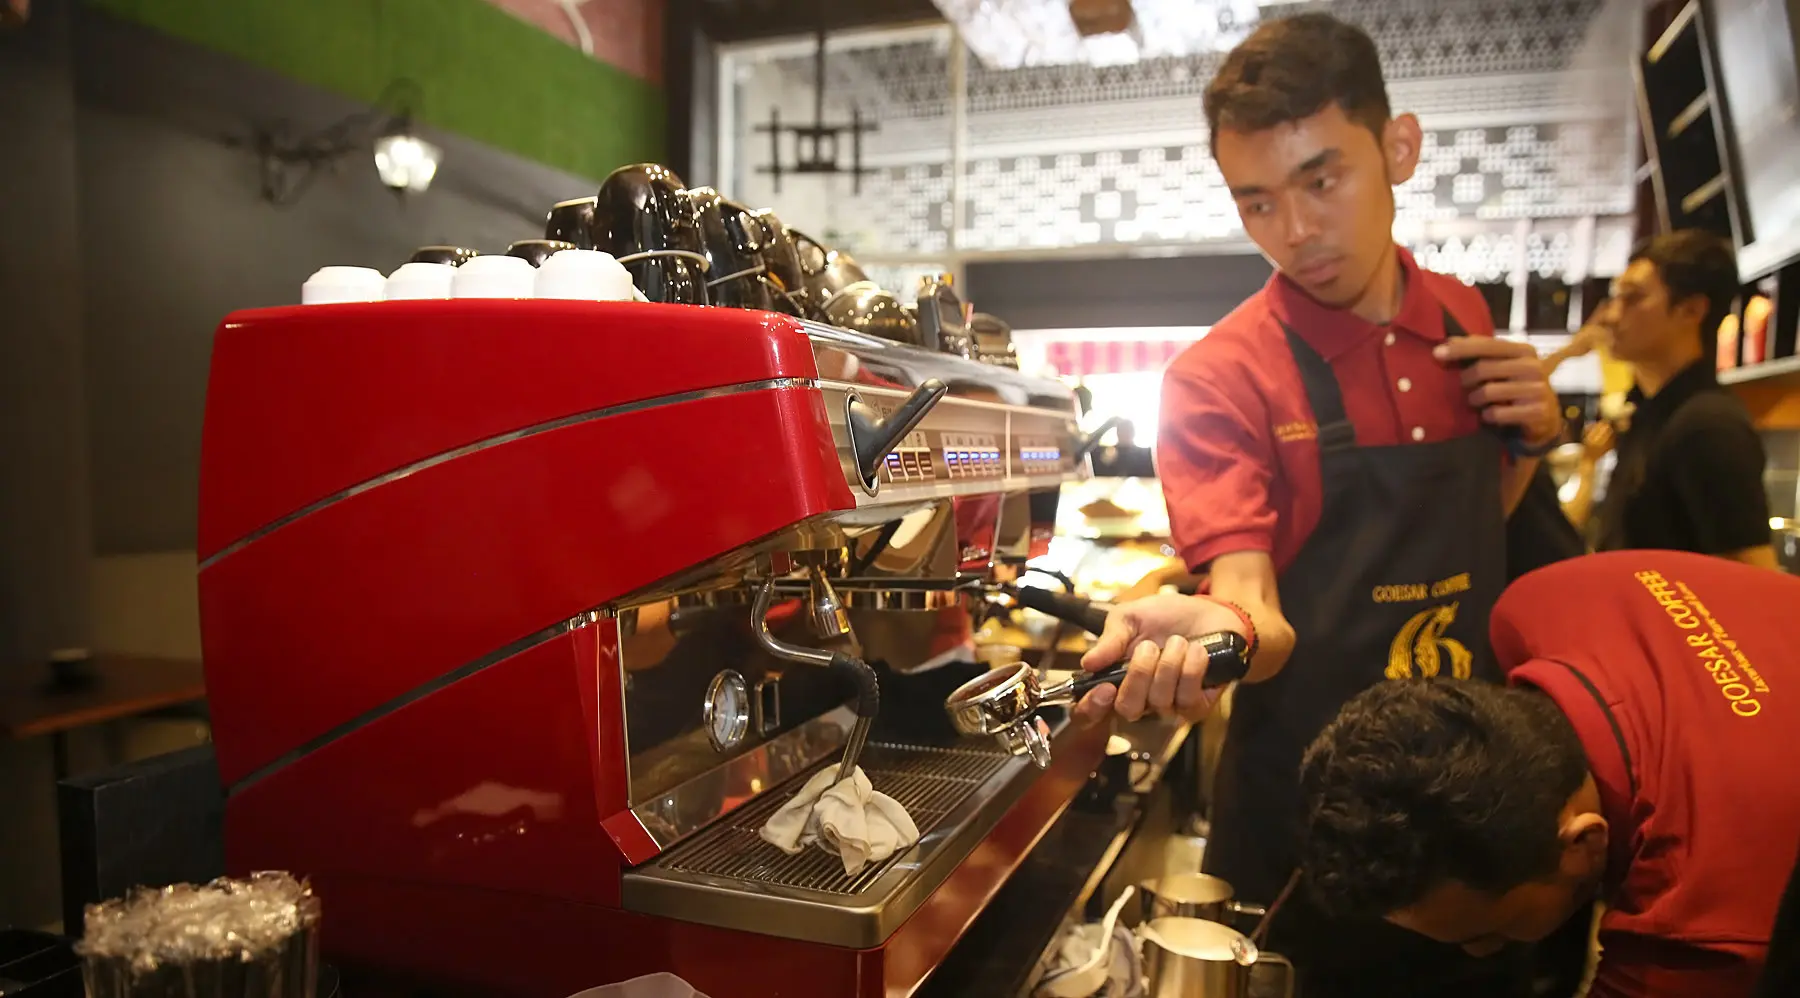 Goesar Coffee, Kalimalang, Jakarta Timur. (Bambang E. Ros/Bintang.com)